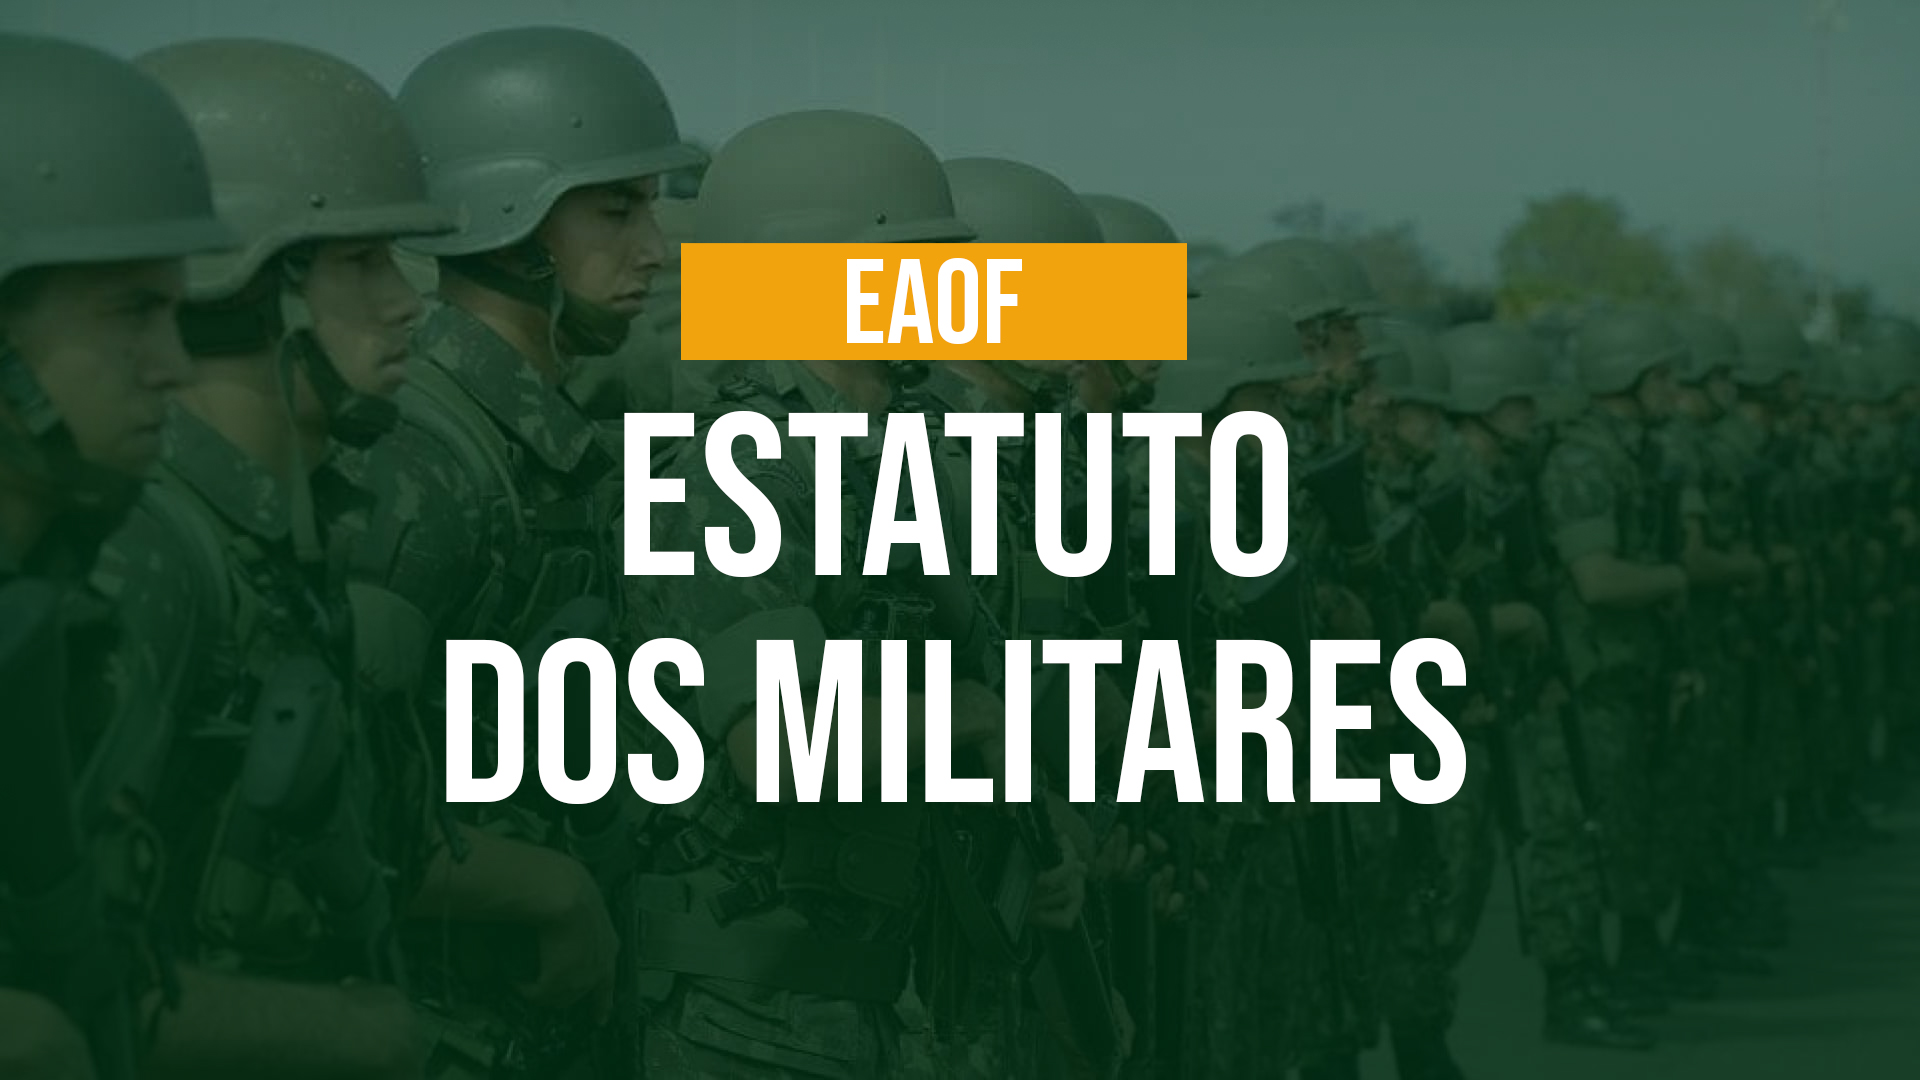 EAOF-estatuto-dos-militares